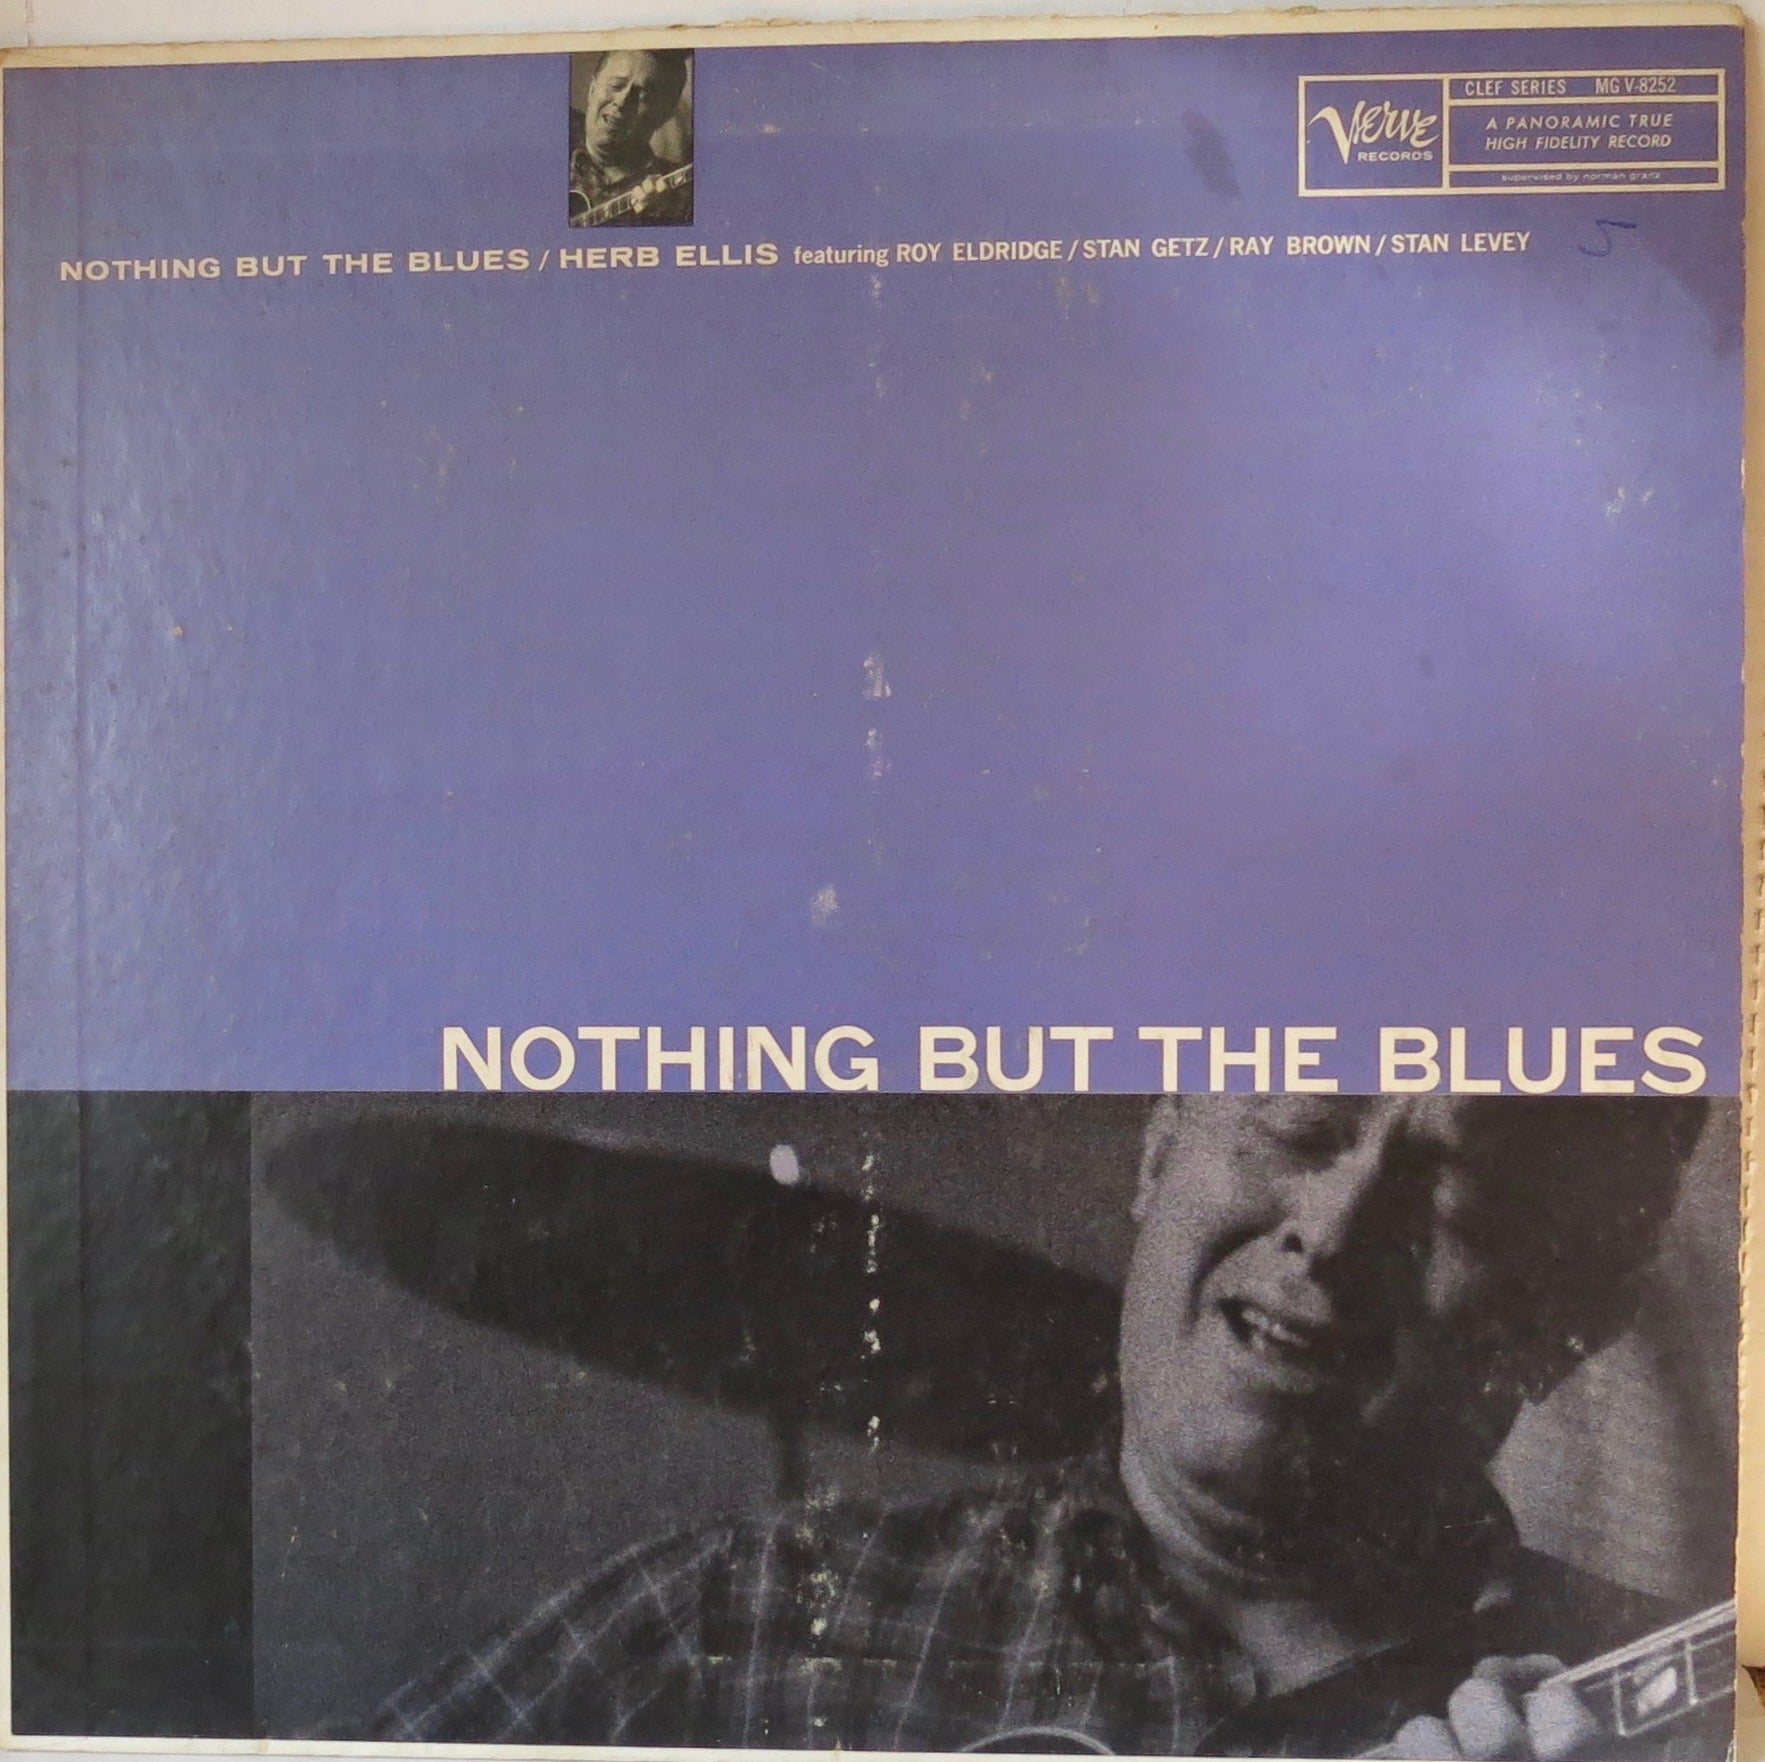 Herb Ellis - Nothing But The Blues featuring Roy Eldridge, Stan Getz, Ray Brown, Stan Levey - Verve